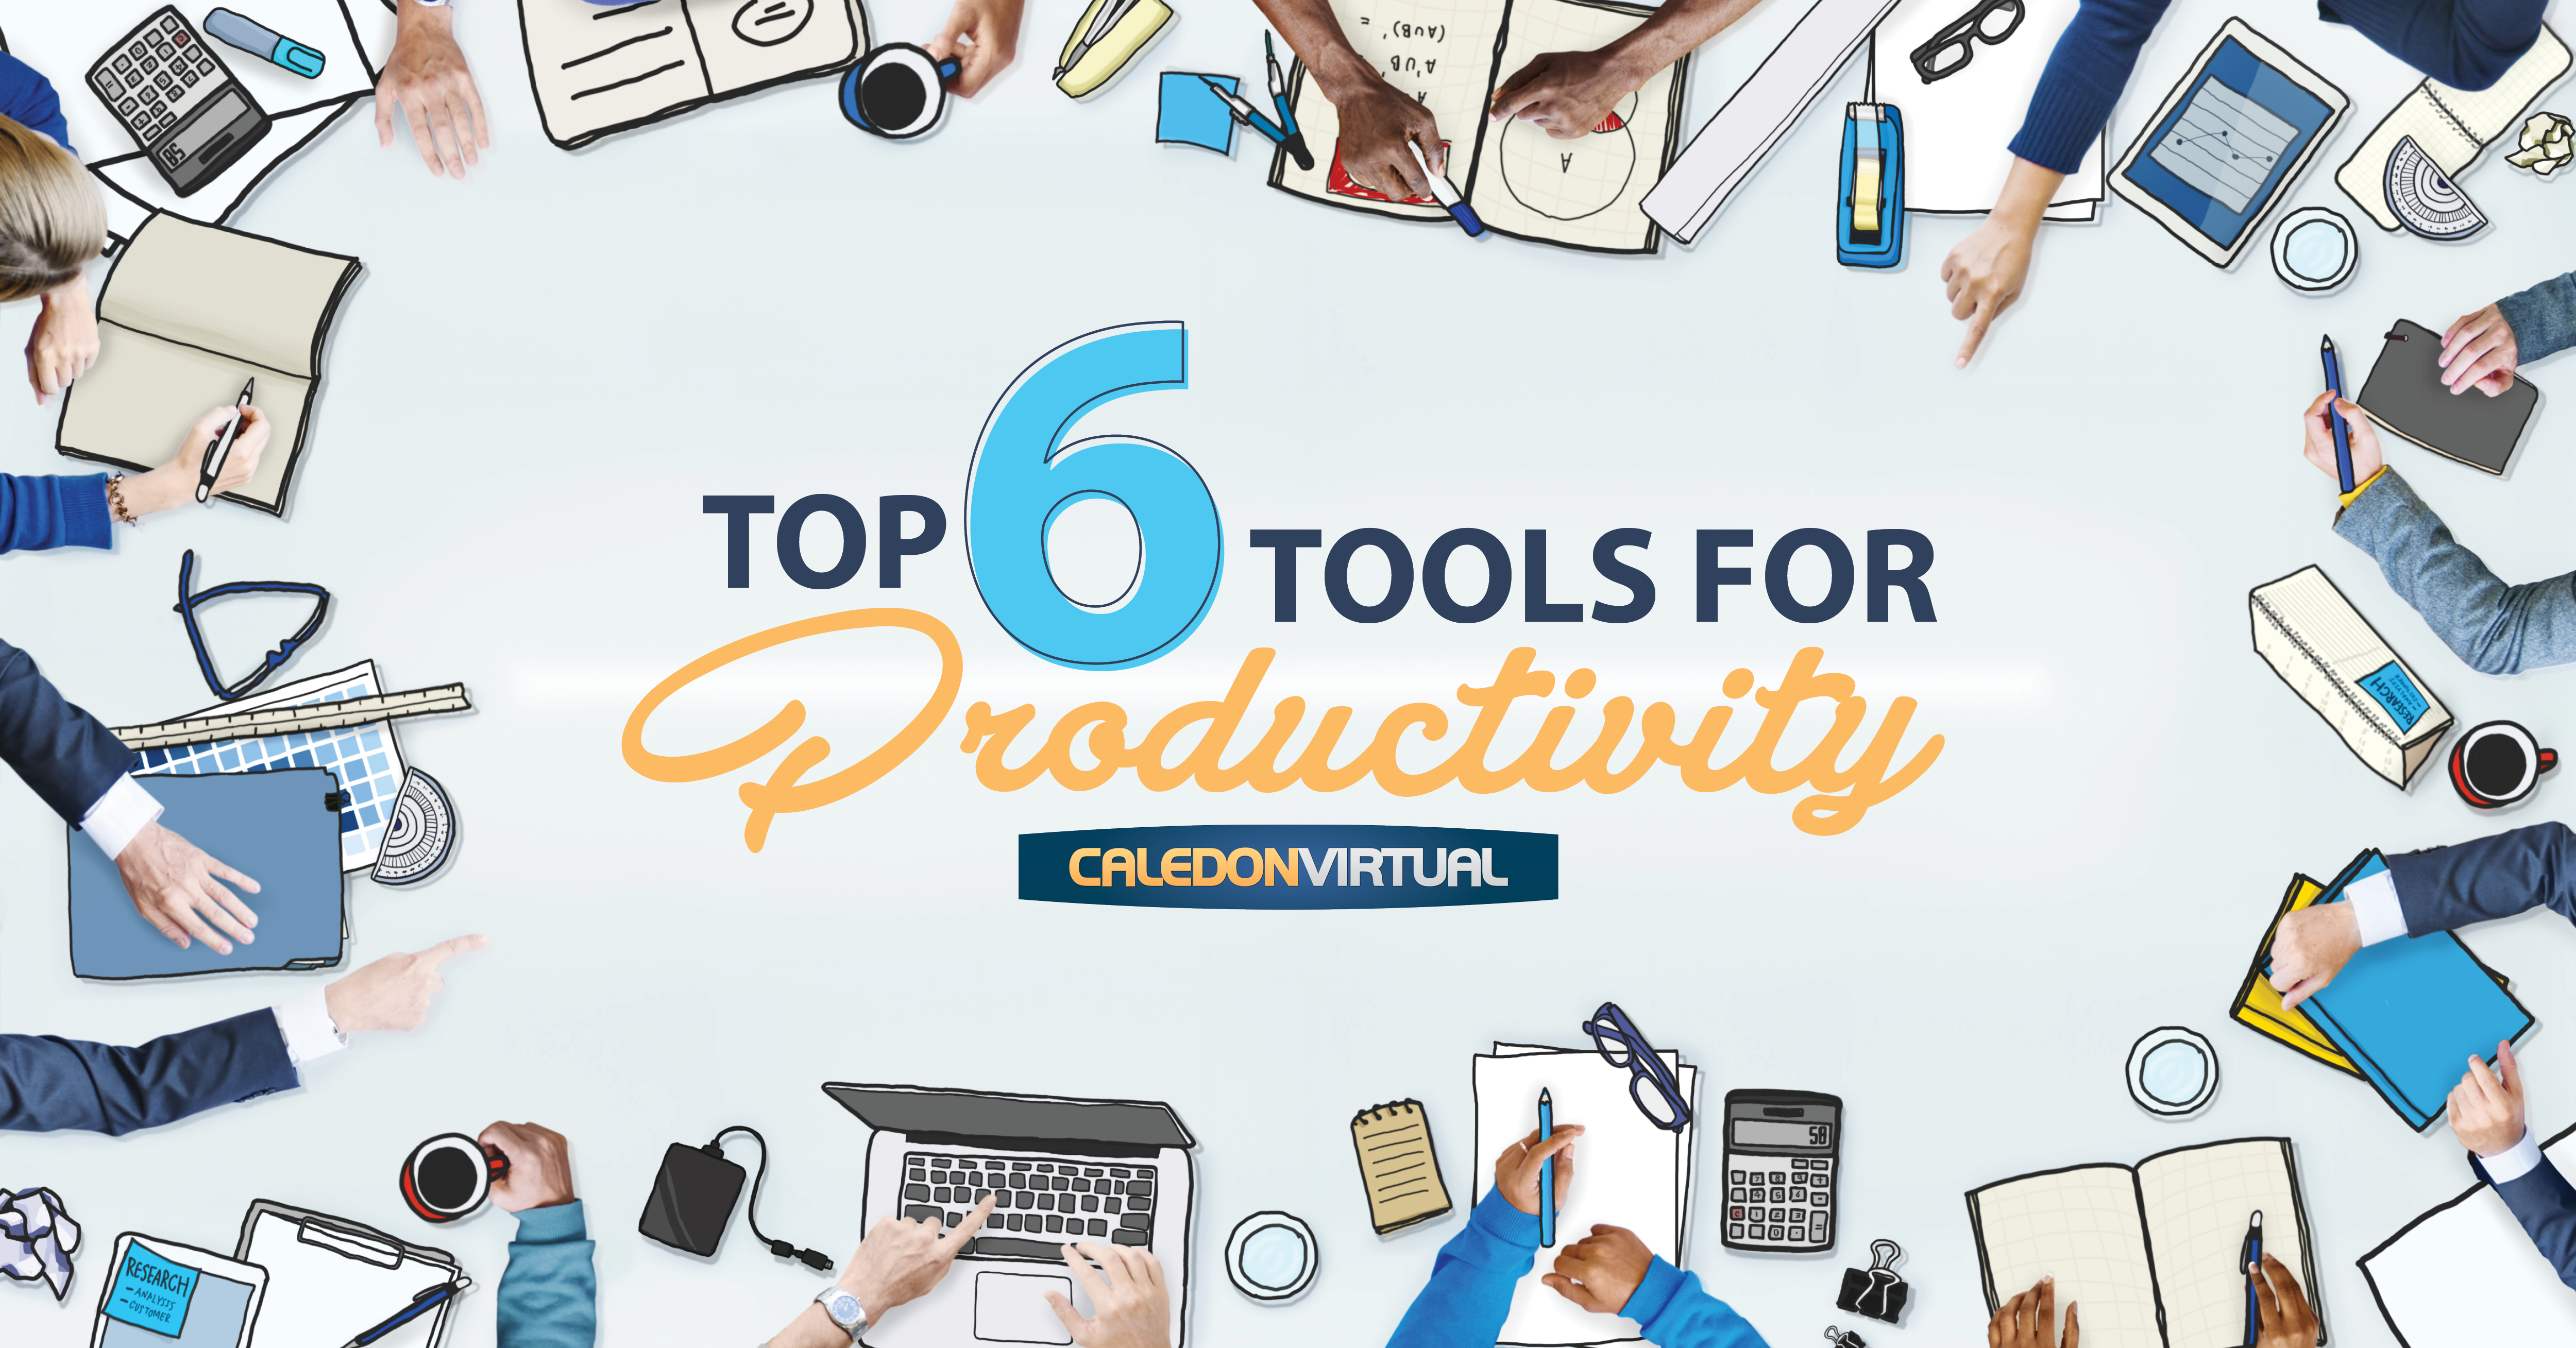 Top 6 Tools for Productivity Caledon Virtual Digital Marketing Agency